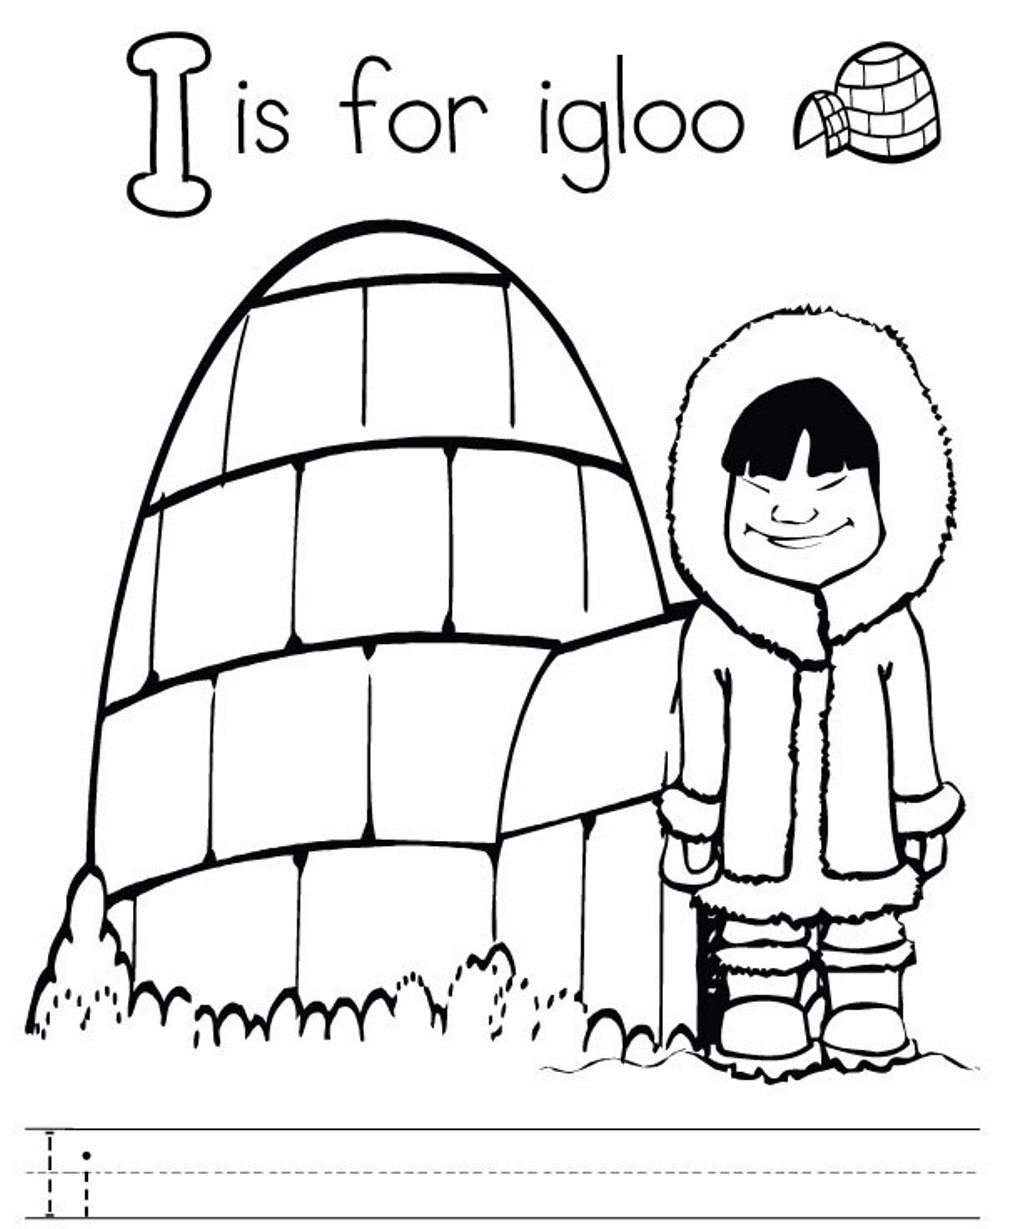 Igloo coloring #19, Download drawings